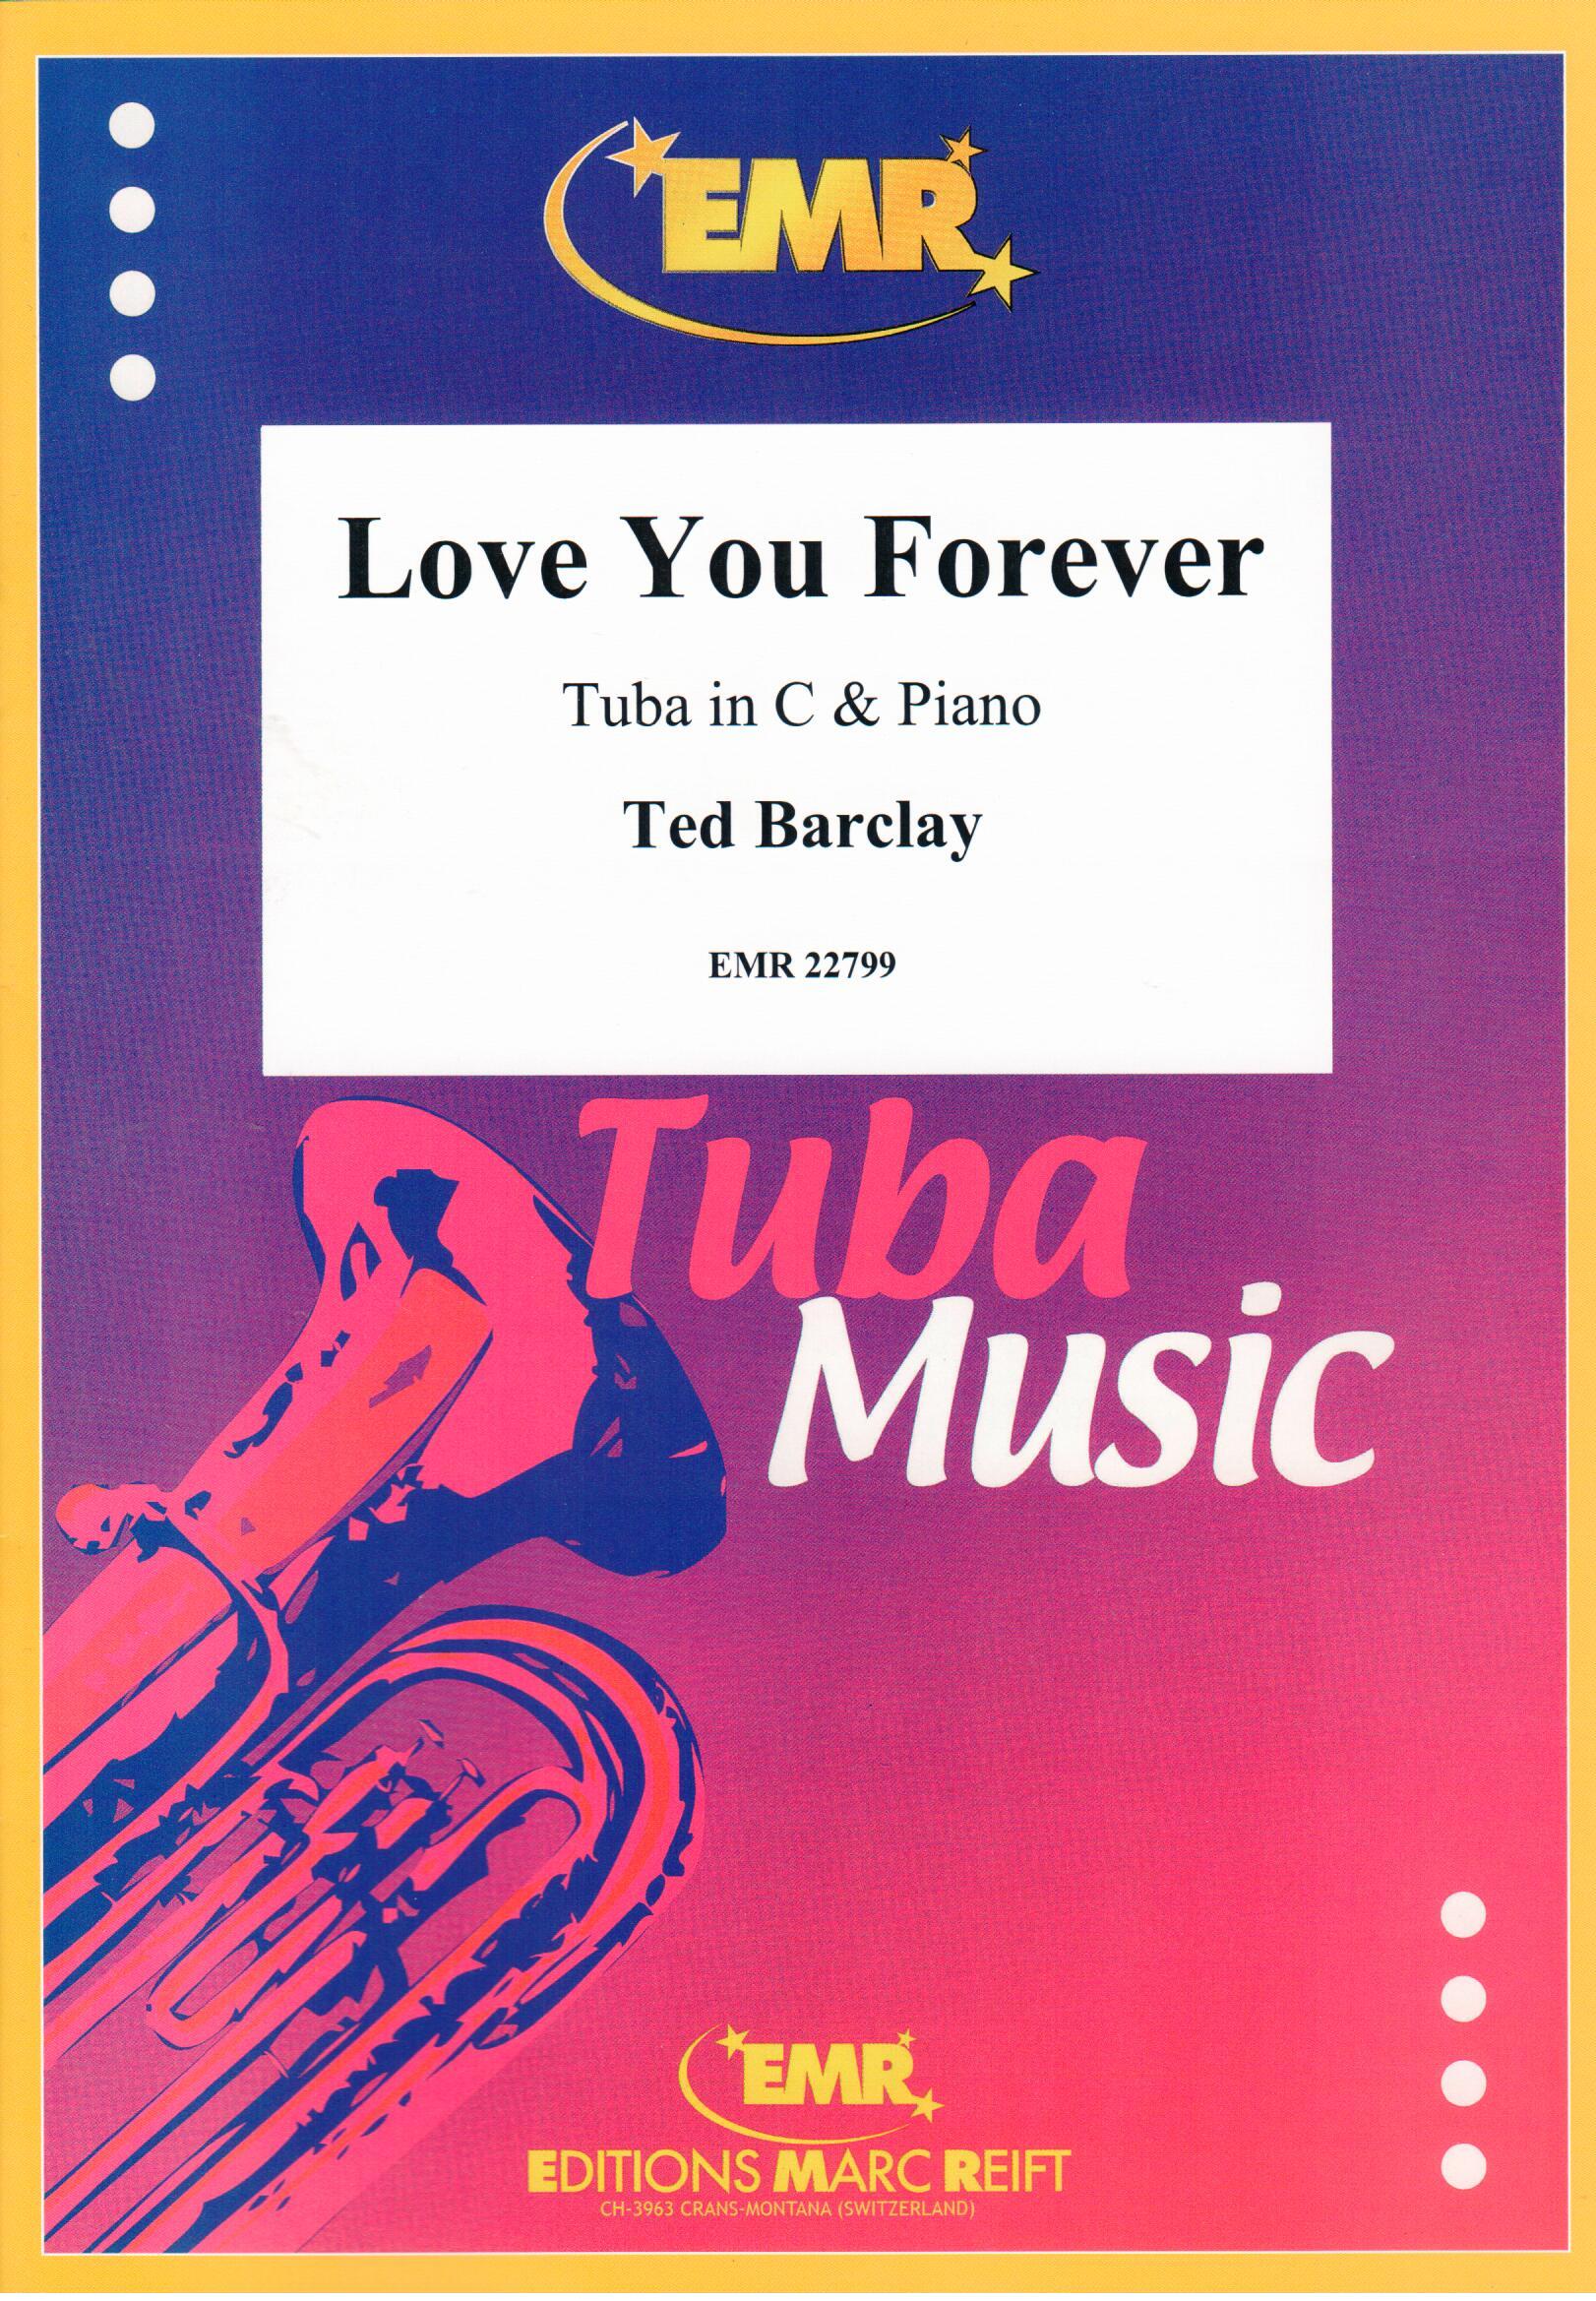 LOVE YOU FOREVER, SOLOS - E♭. Bass